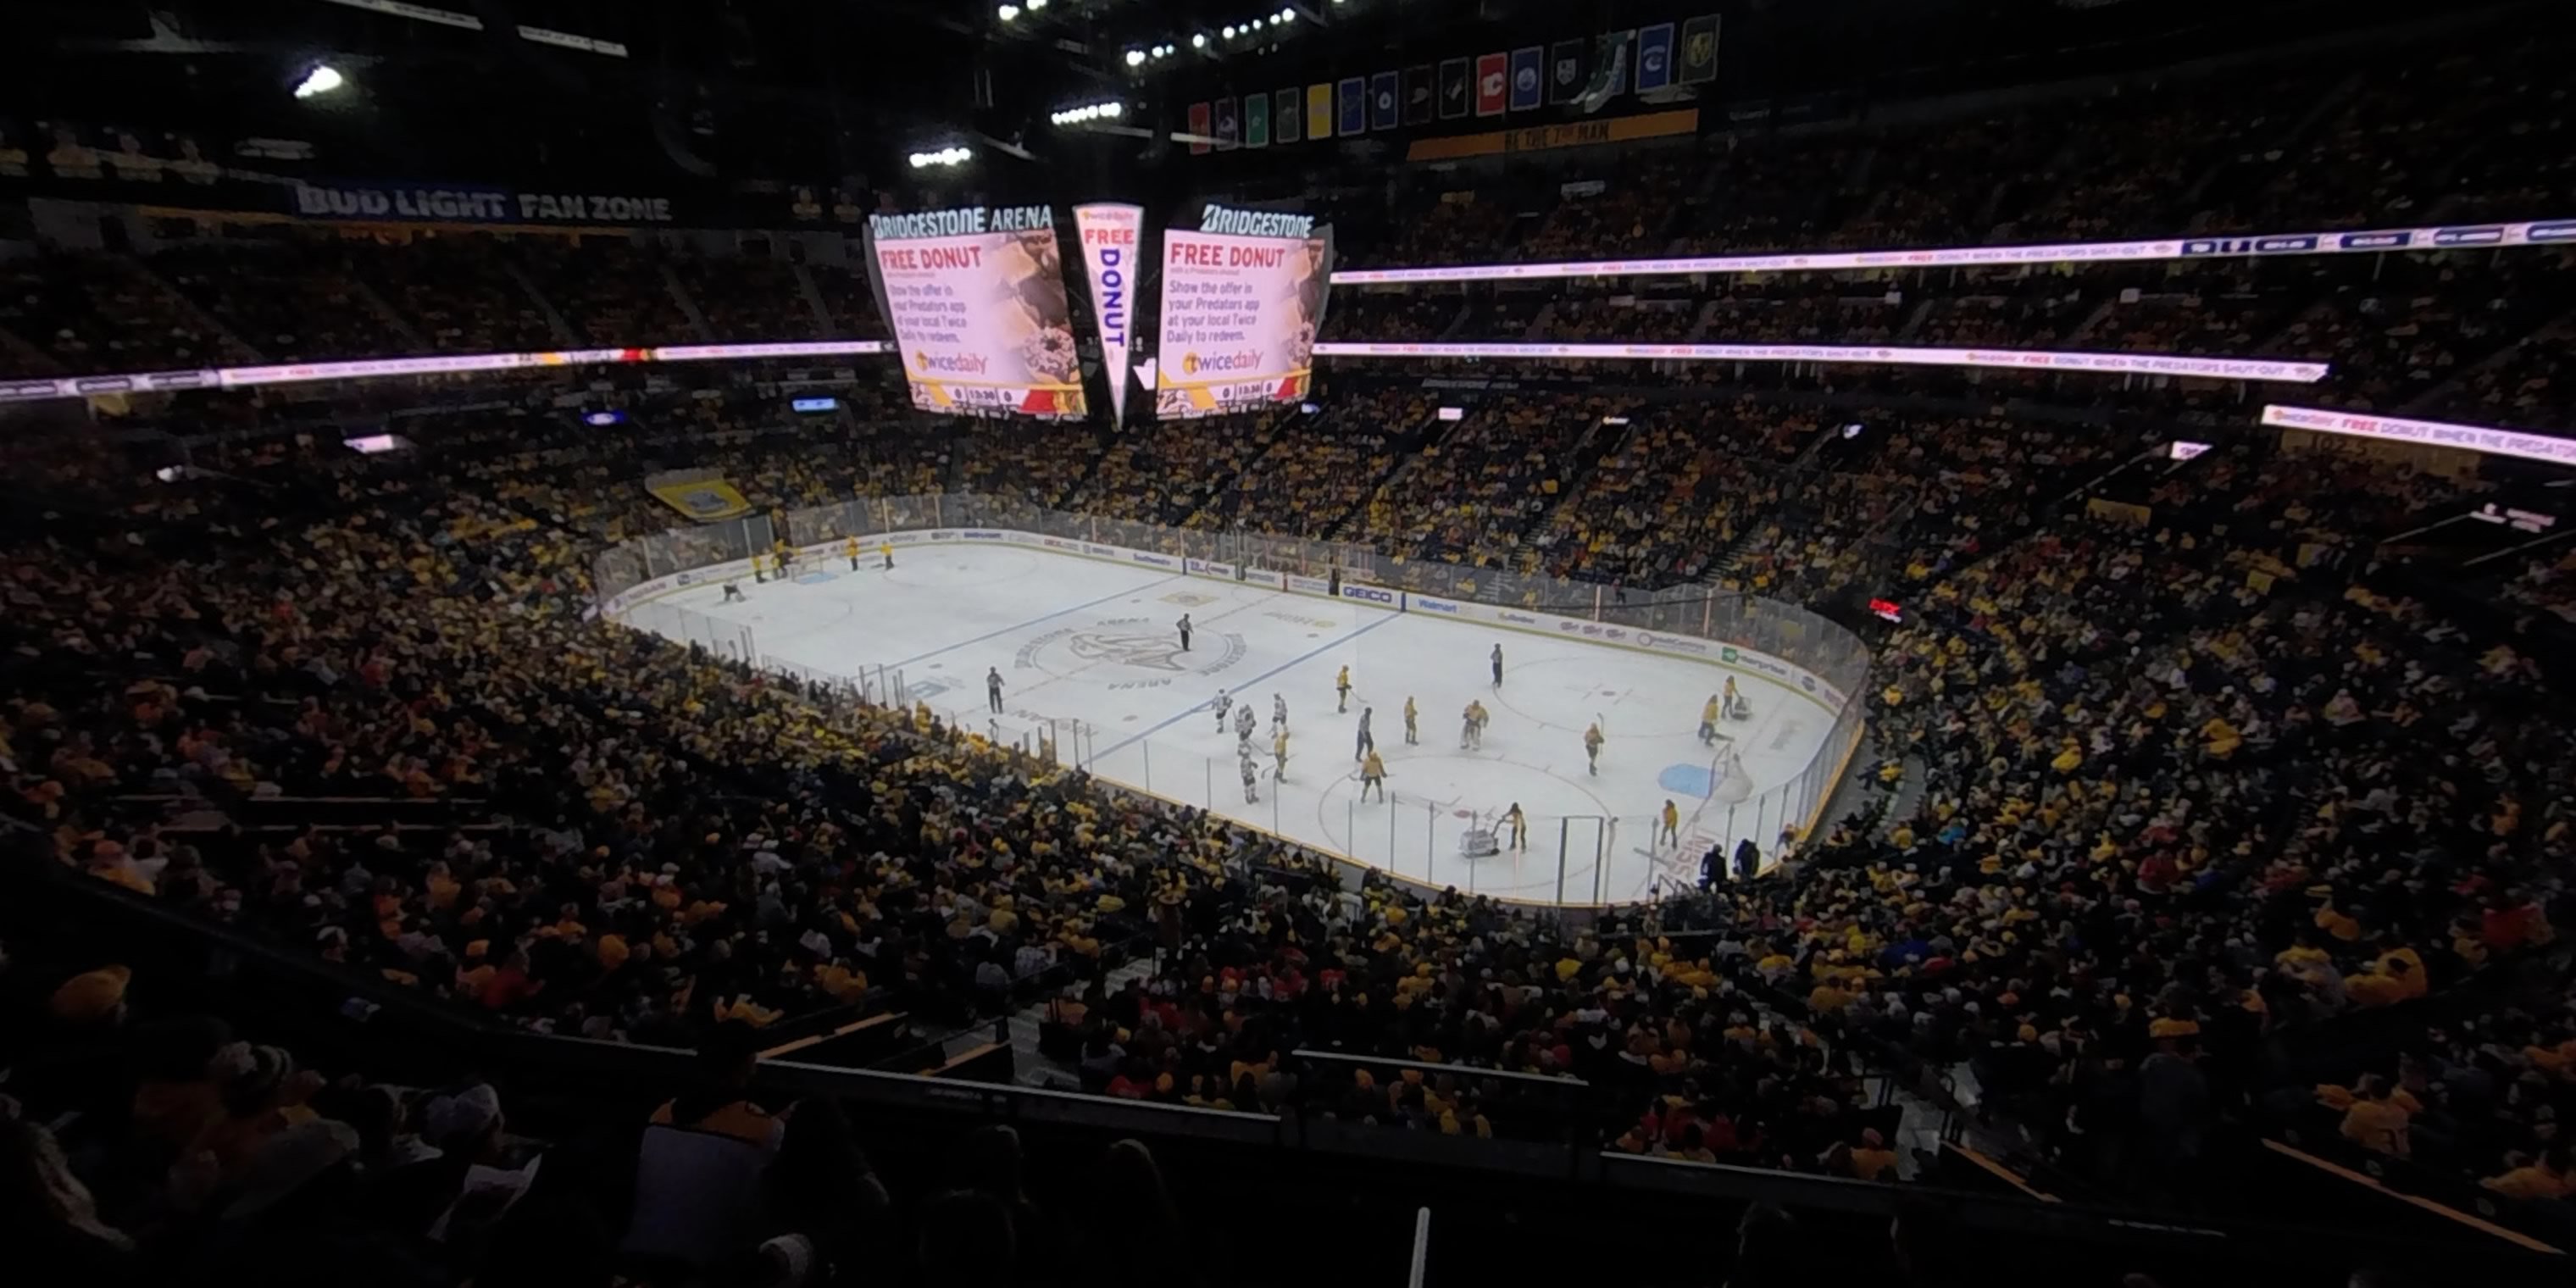 section 219 panoramic seat view  for hockey - bridgestone arena